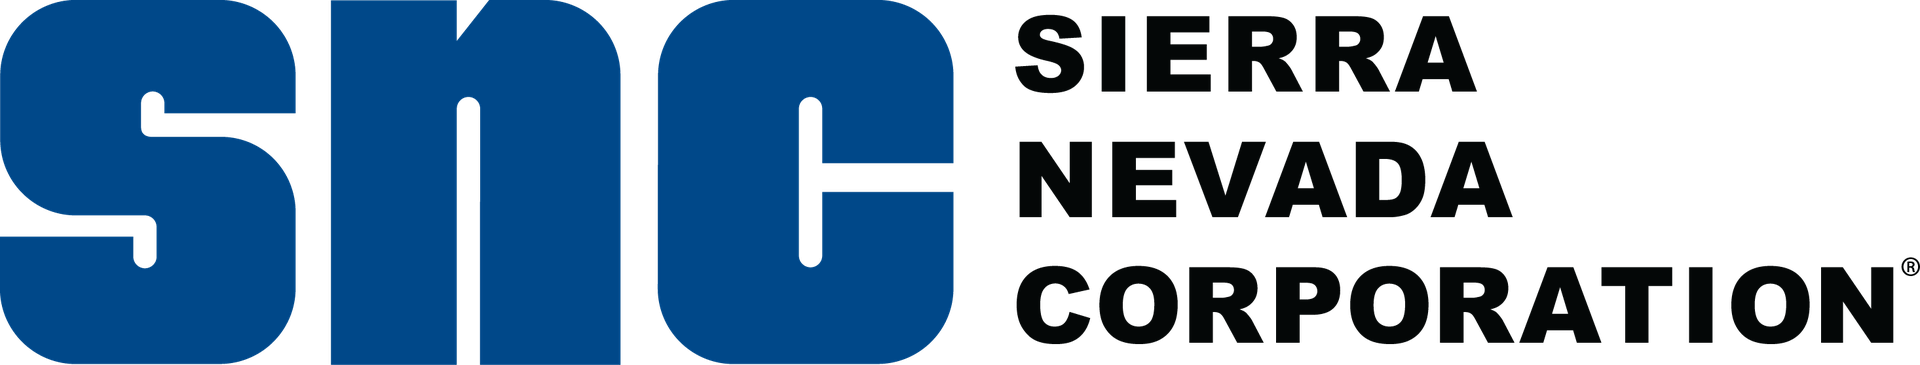 Sierra Nevada Corporation's logo